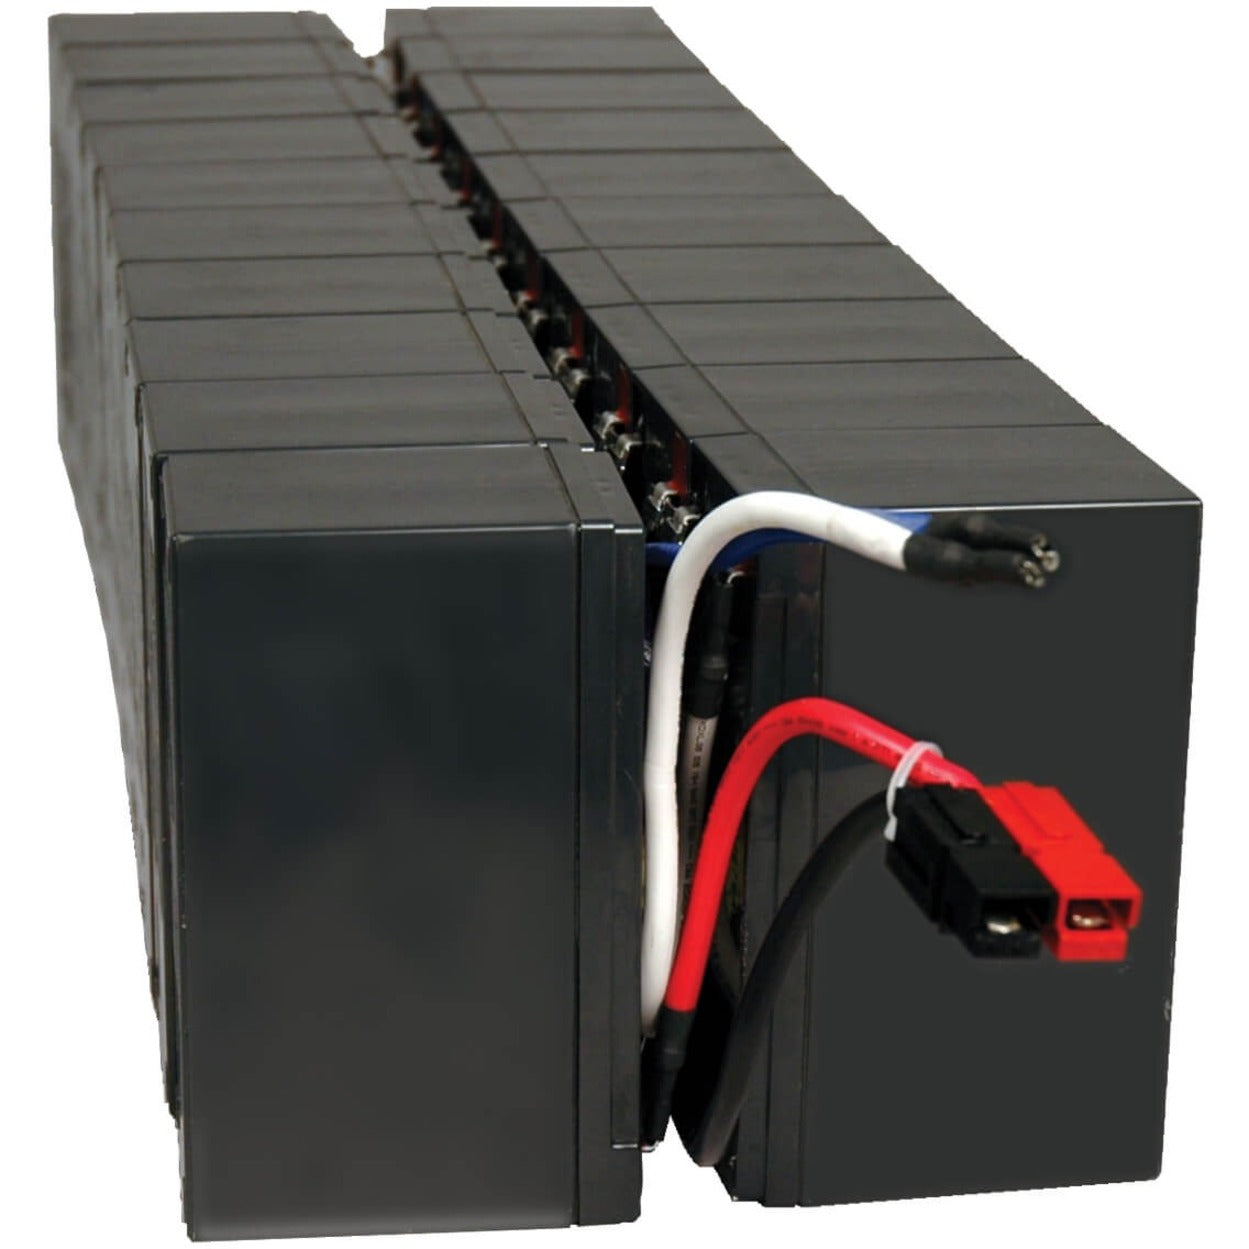 Tripp Lite SURBC2030 UPS Internal Battery Pack, 20K 30K 3-PH Compatible, 1 Year Warranty